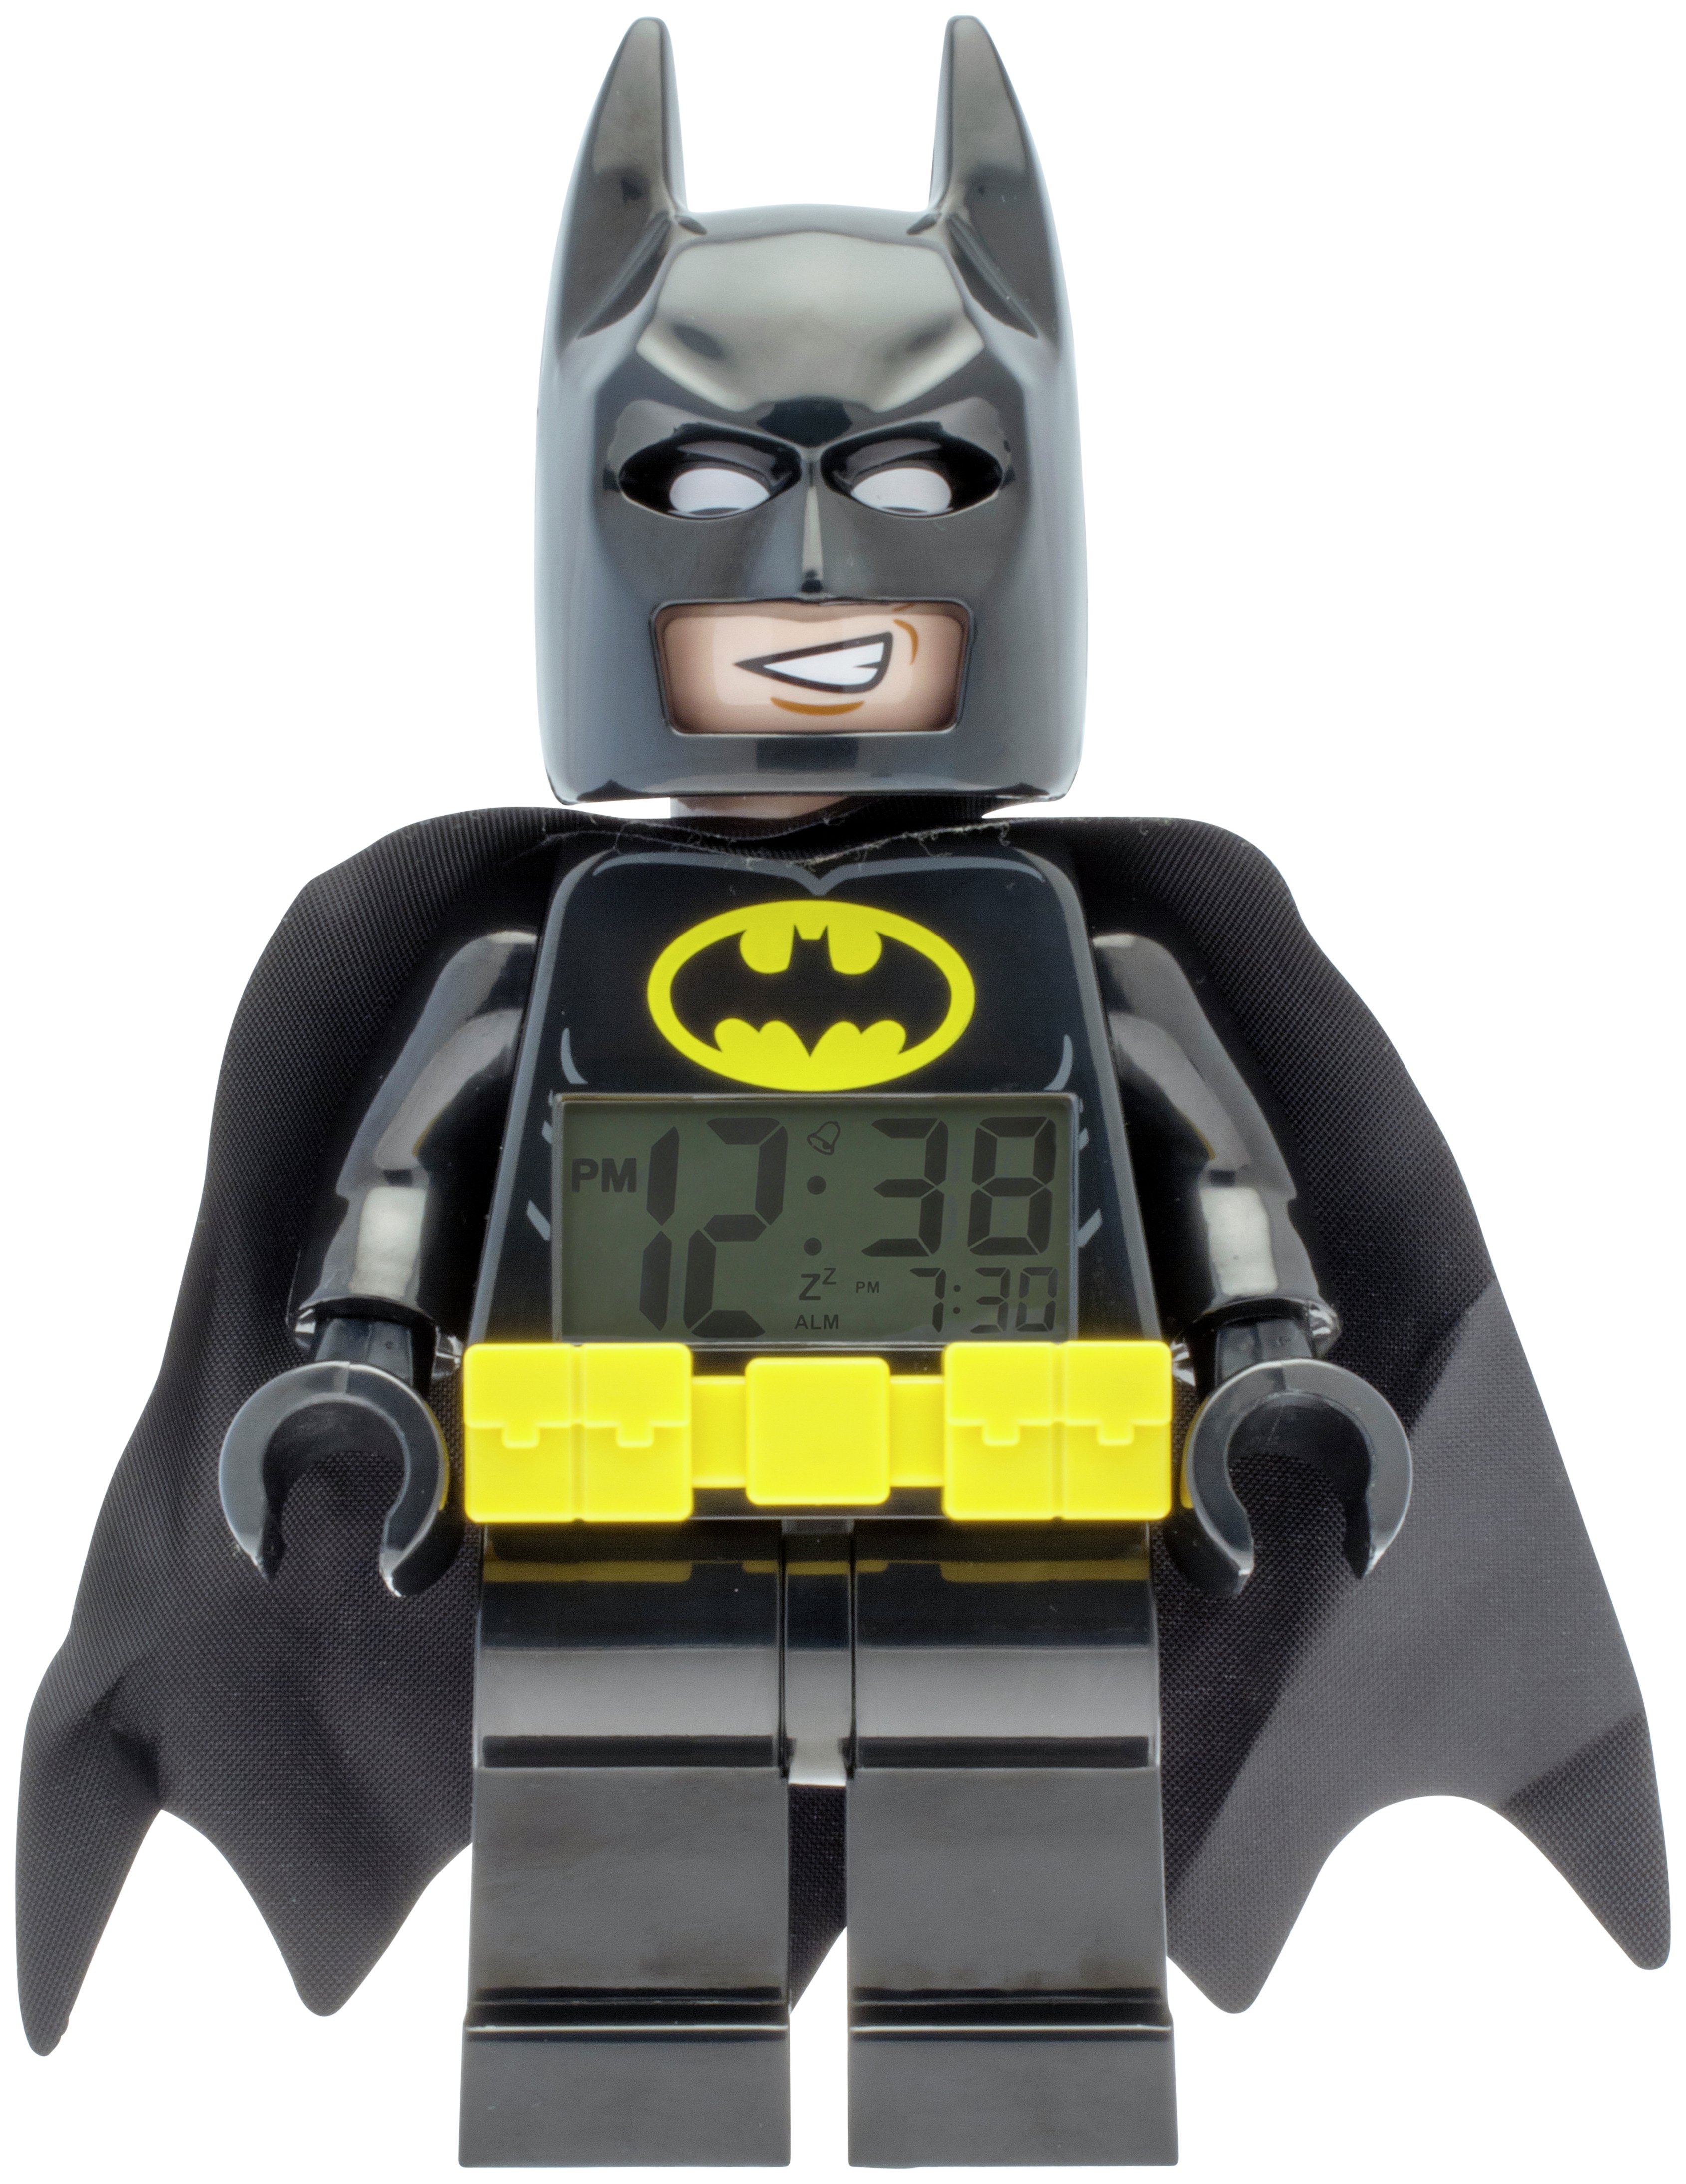 LEGO BATMAN MOVIE Batman Minifigure Alarm Clock